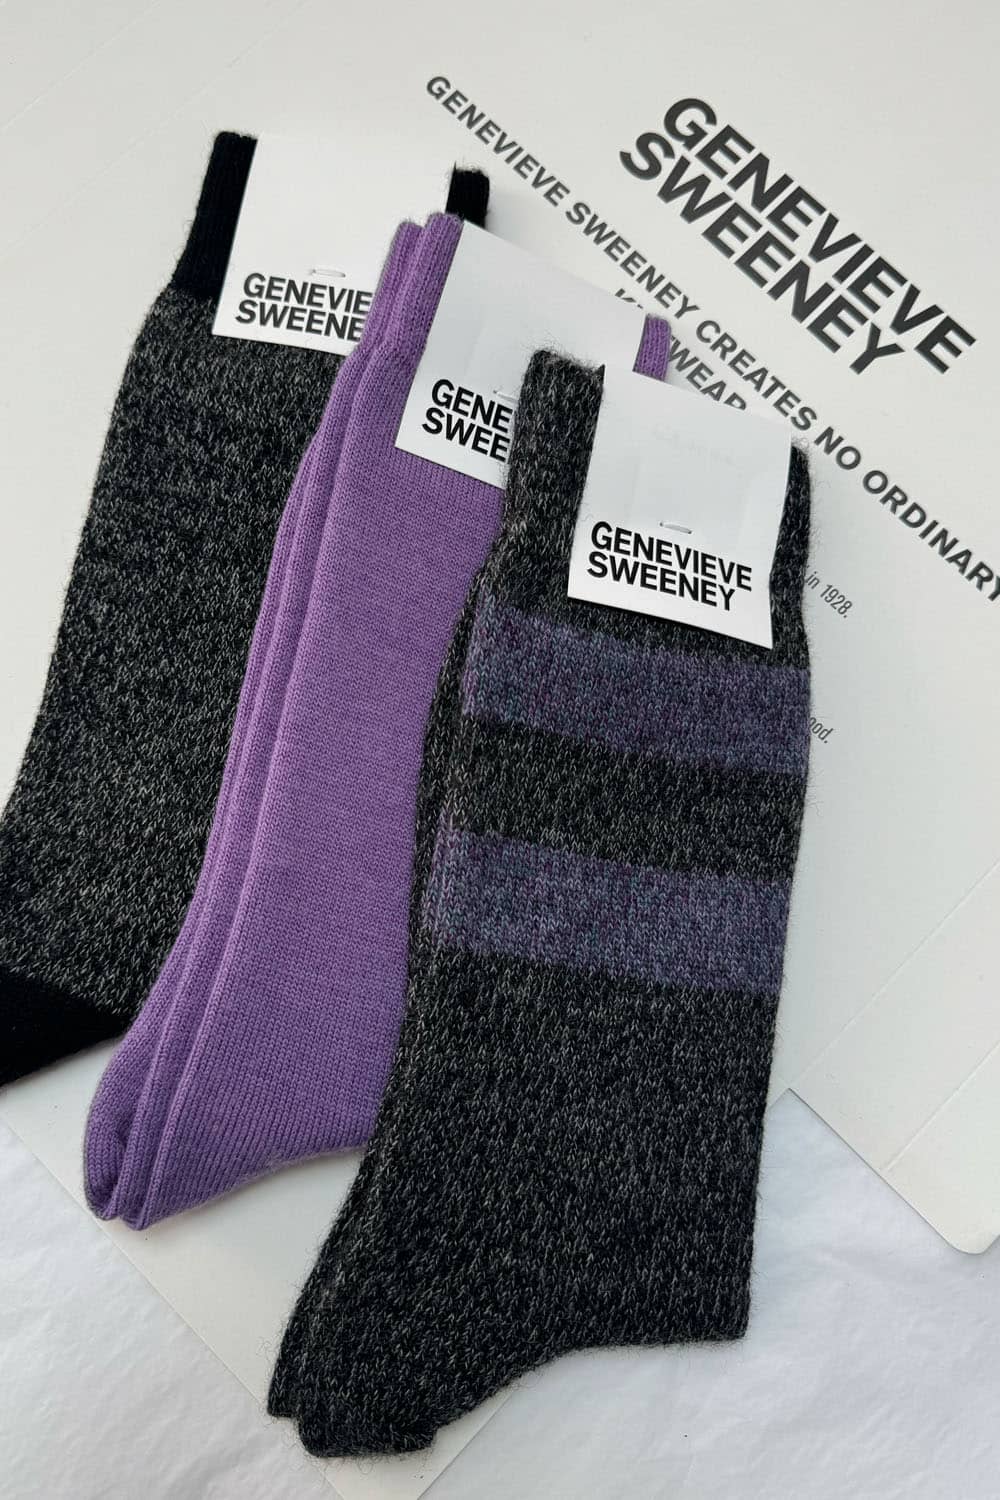 Merino Wool Gift Set Socks Black Lilac Marl in British Made